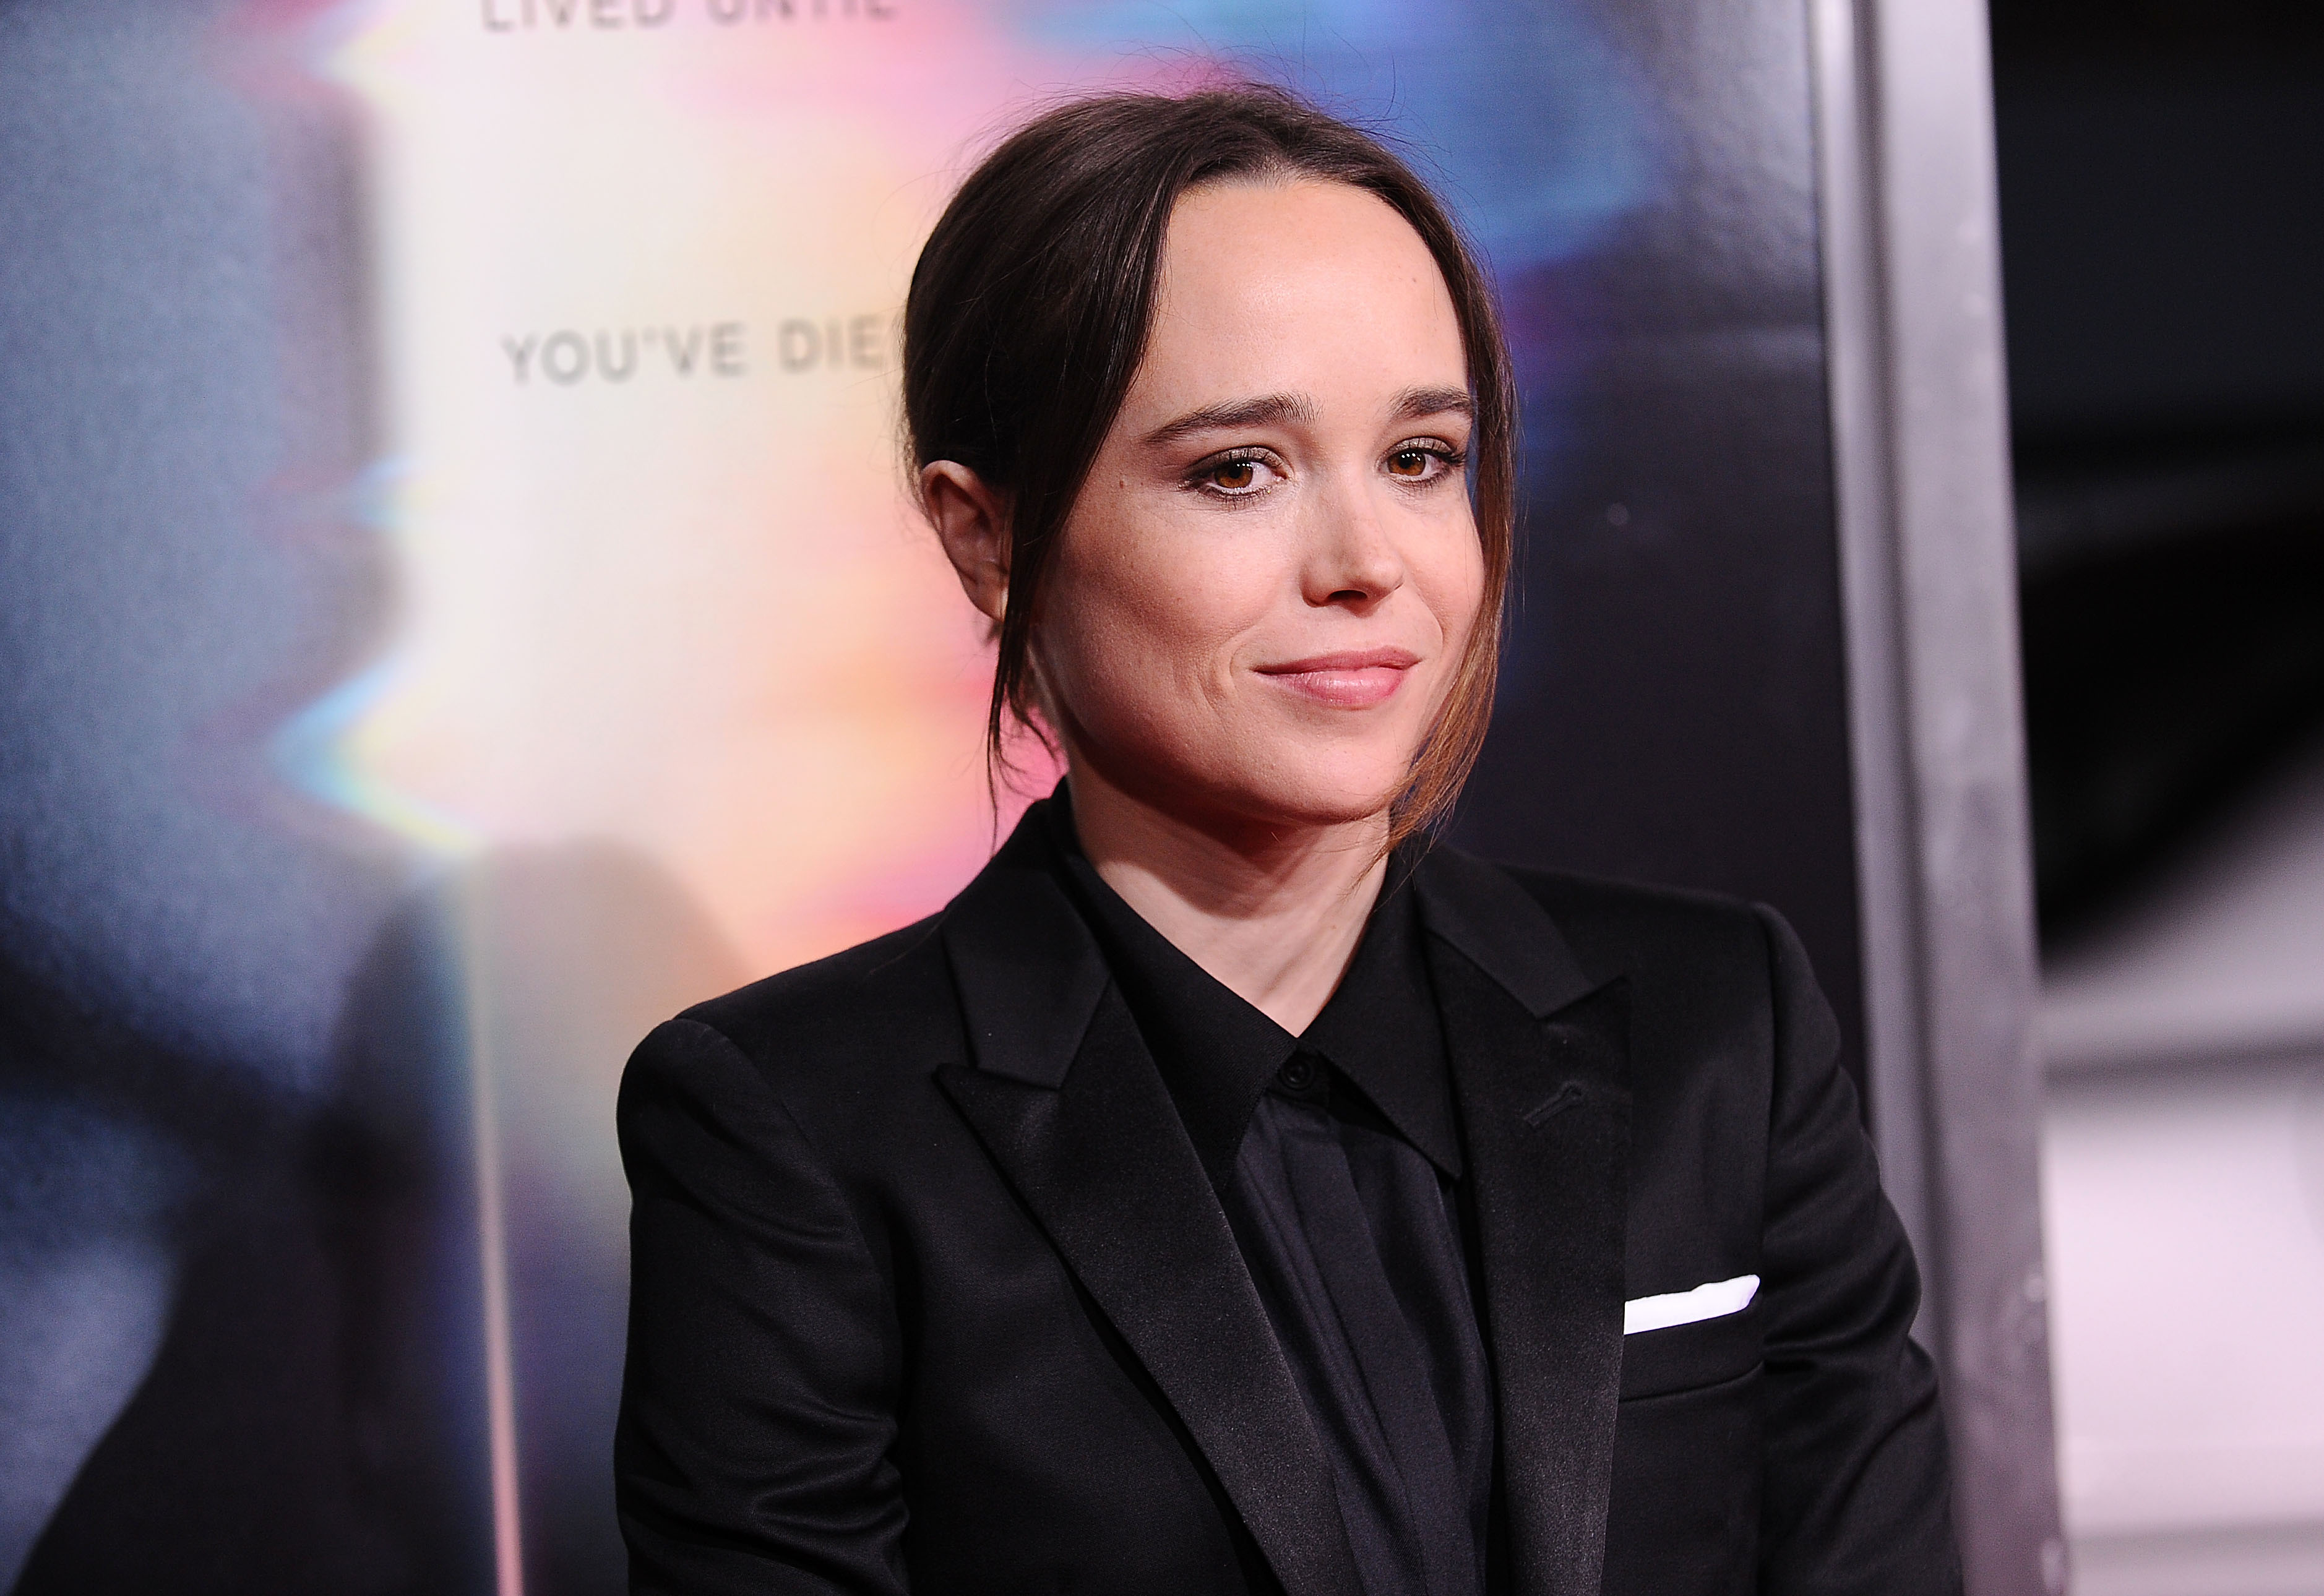 LOS ANGELES, CA - SEPTEMBER 27: Actress Ellen Page attends the premiere of "Flatliners" at The Theatre at Ace Hotel on September 27, 2017 in Los Angeles, California. (Photo by Jason LaVeris/FilmMagic) (Jason LaVeris—FilmMagic)